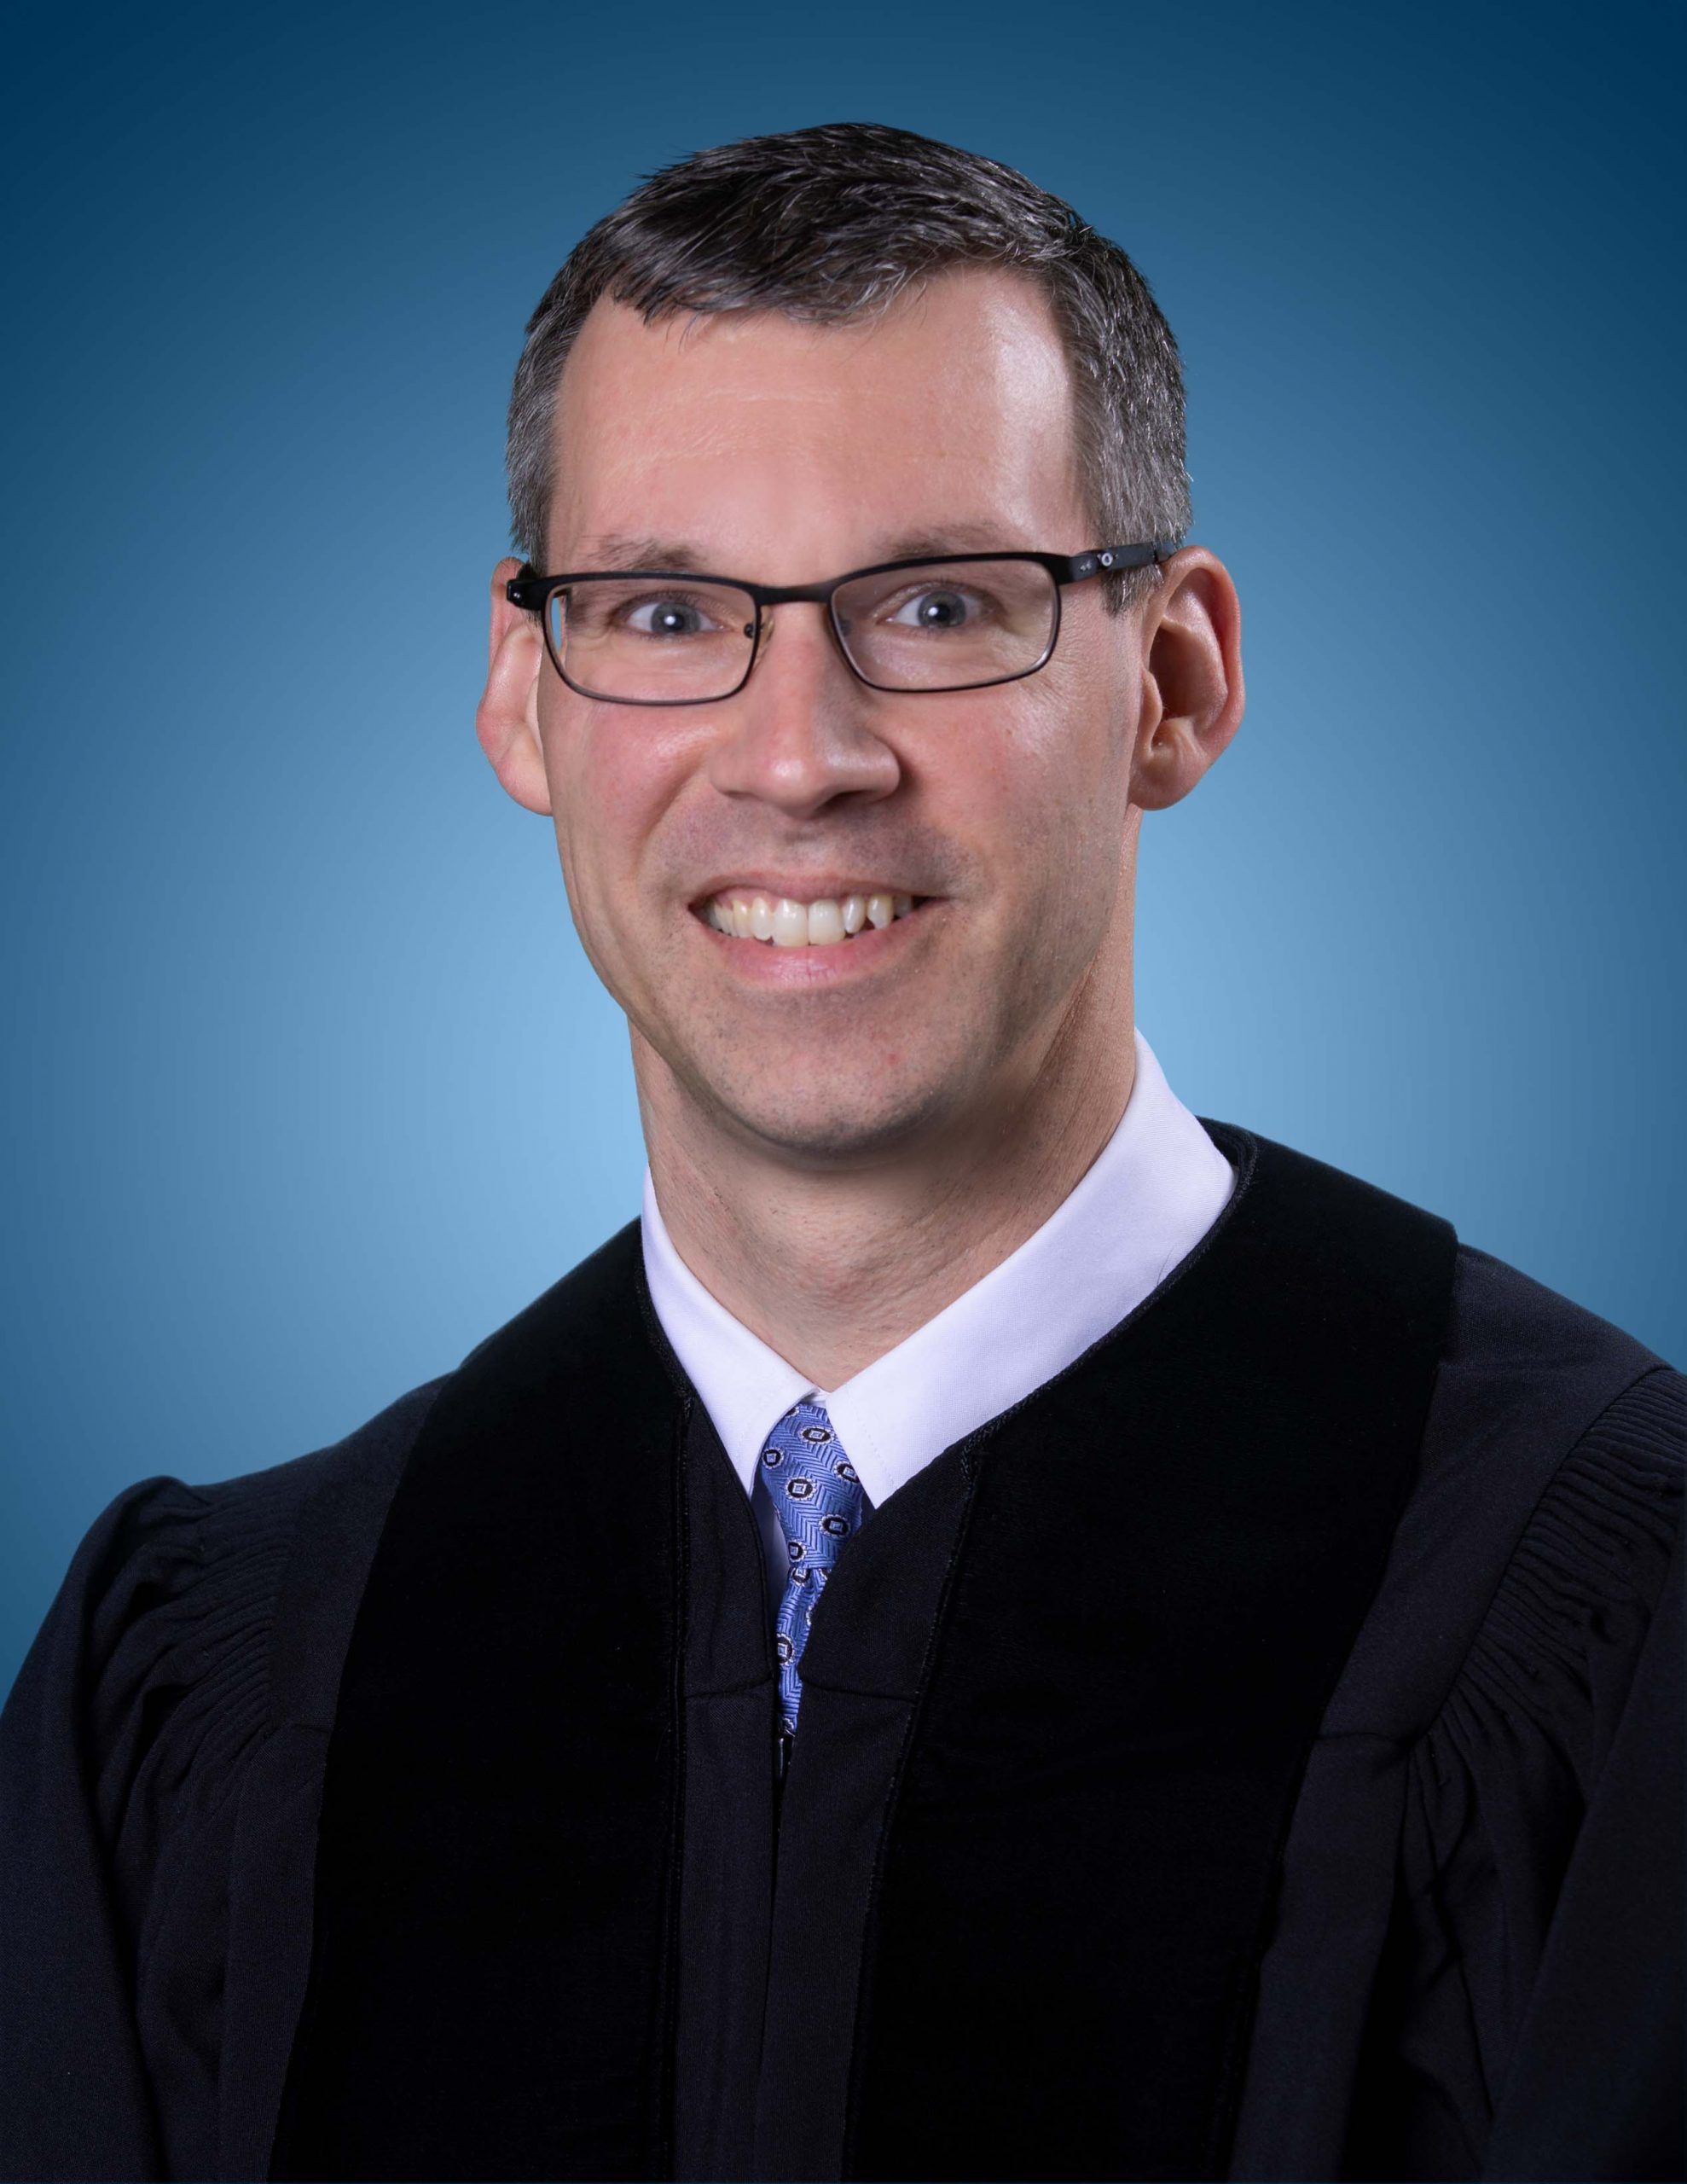 Judge Pierre Bergeron